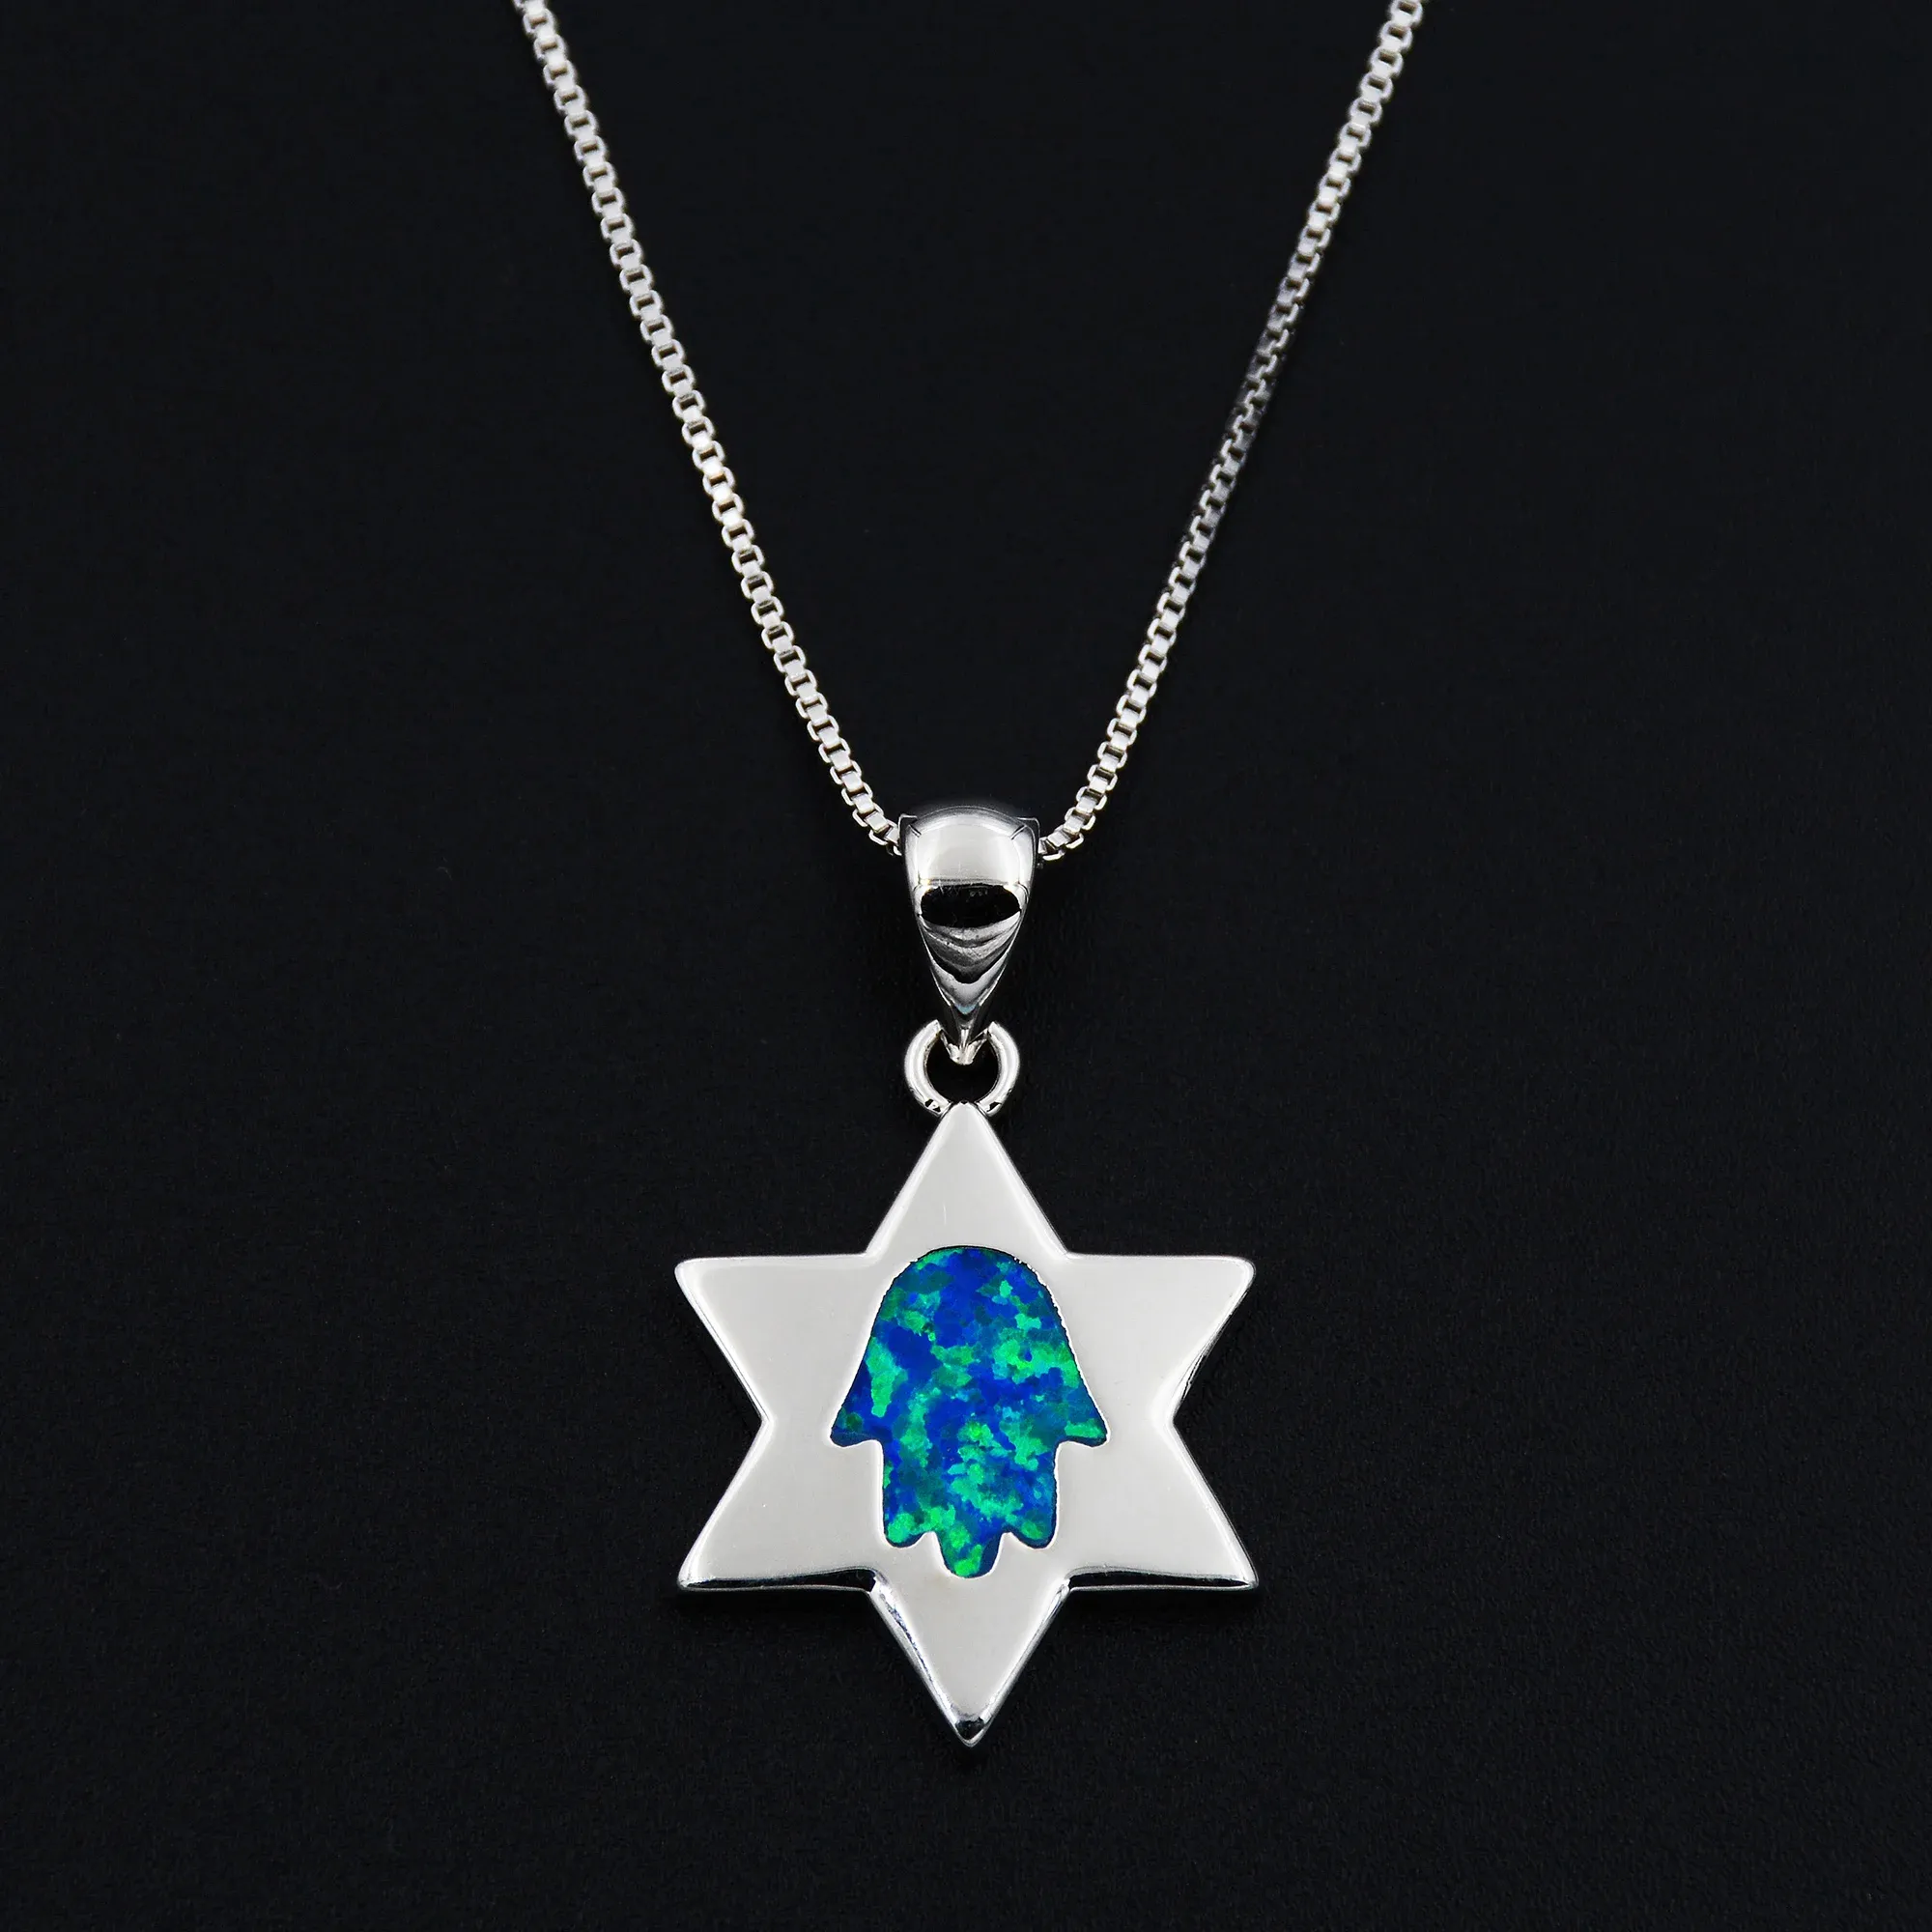 Judaica Jewish Star of David Hamsa Hand Chai Hebrew Israel Ocean Blue Fire Opal Pendant Necklace